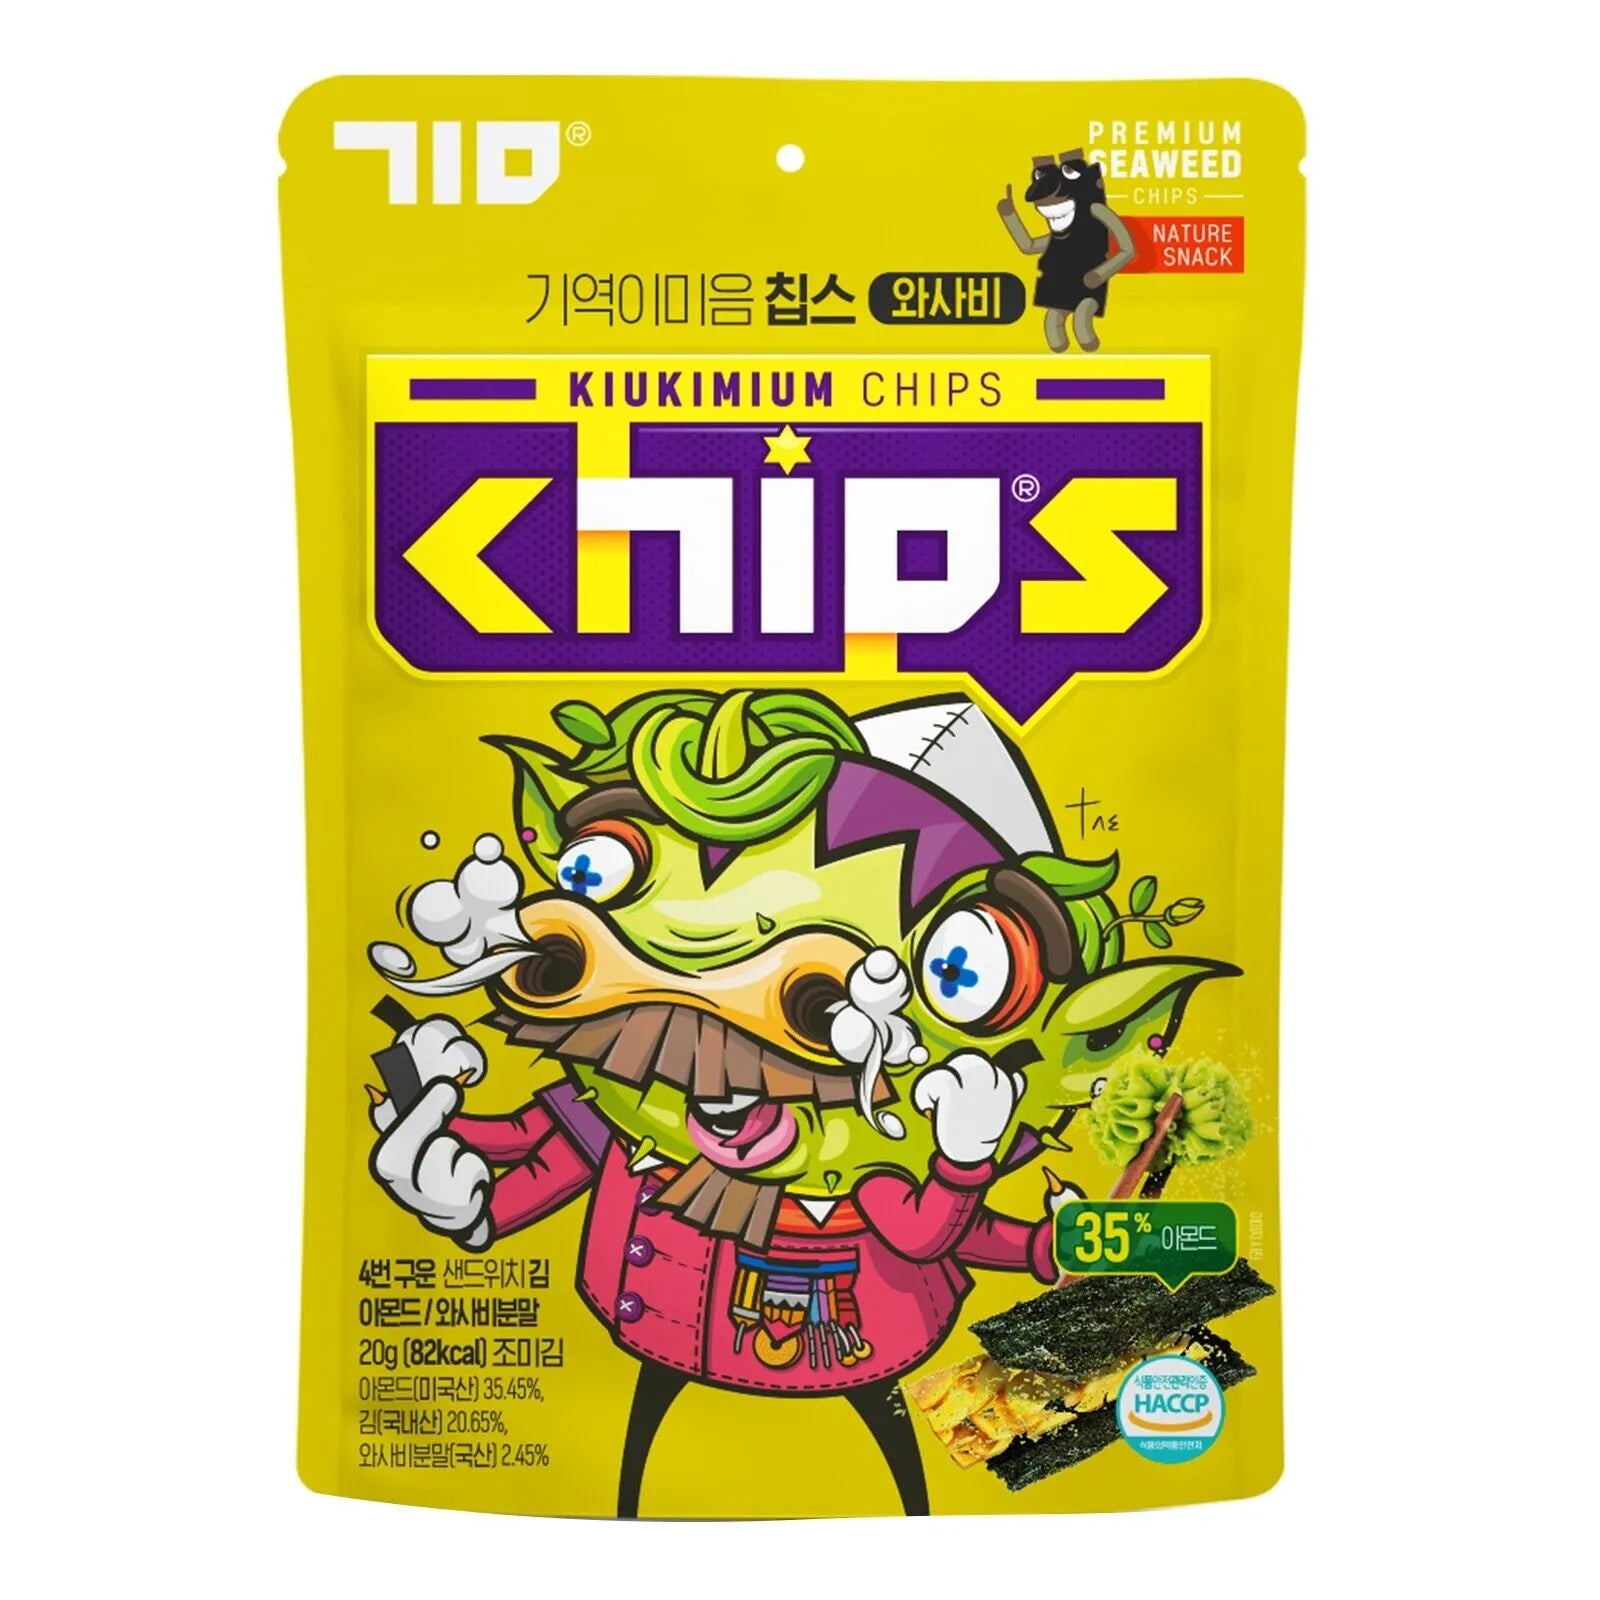 Kiukimium Chips - Wasabi Flavor